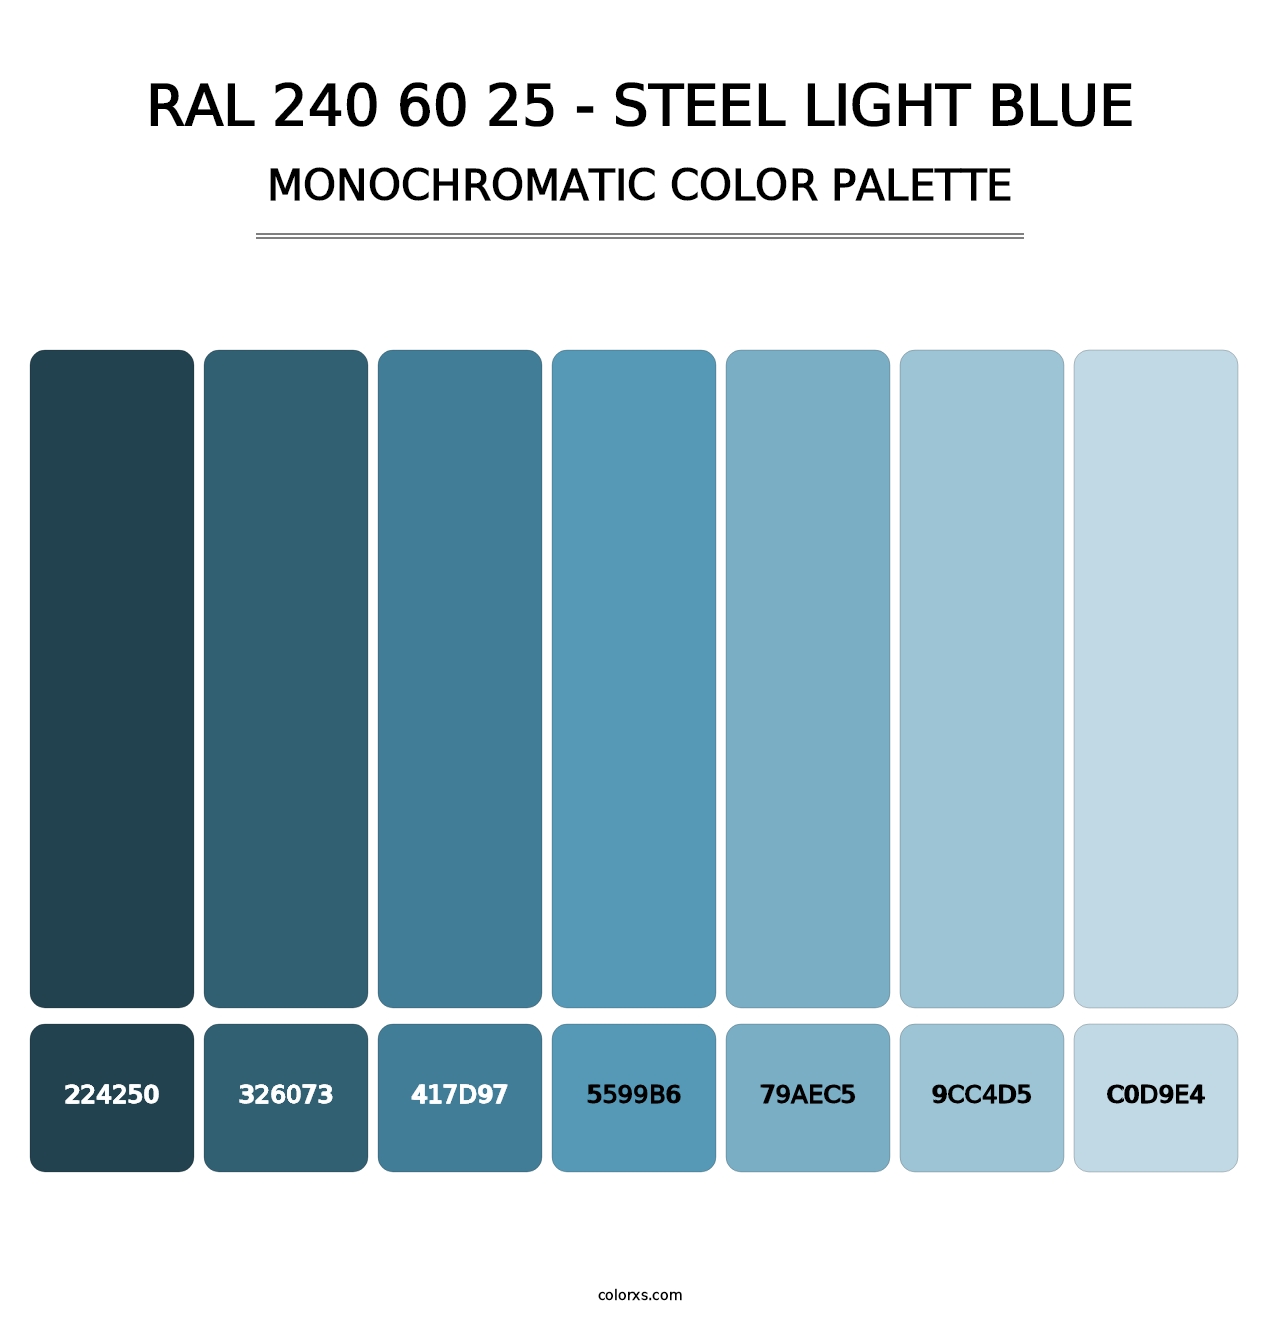 RAL 240 60 25 - Steel Light Blue - Monochromatic Color Palette